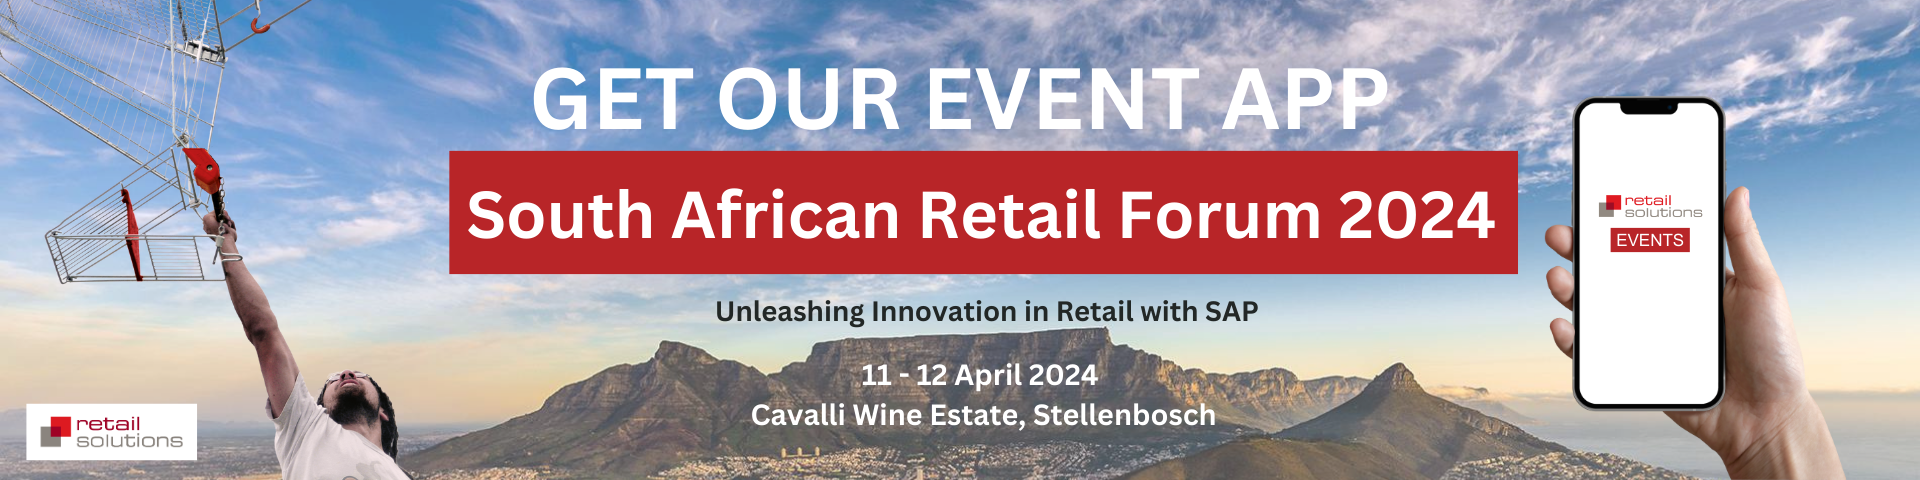 Slider_Event_App_South_African_Retail_Forum